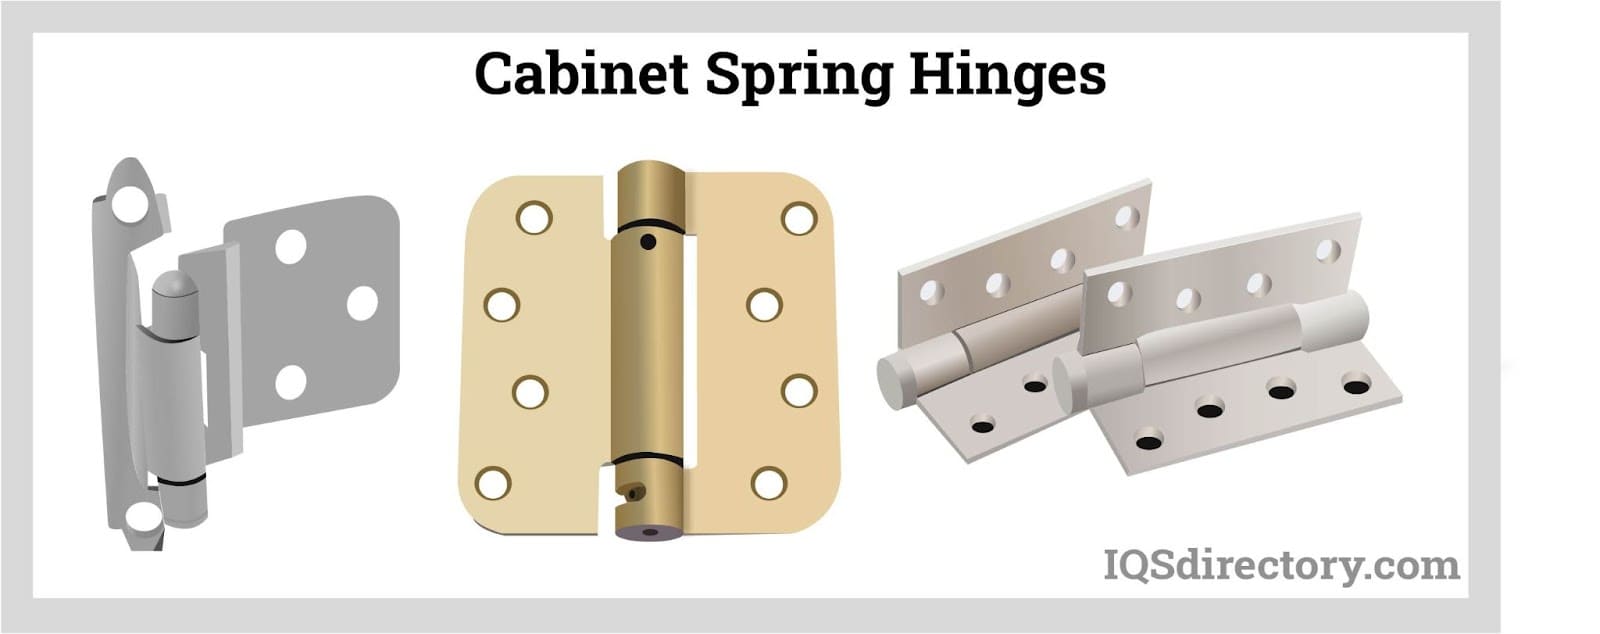 Cabinet Spring Hinges